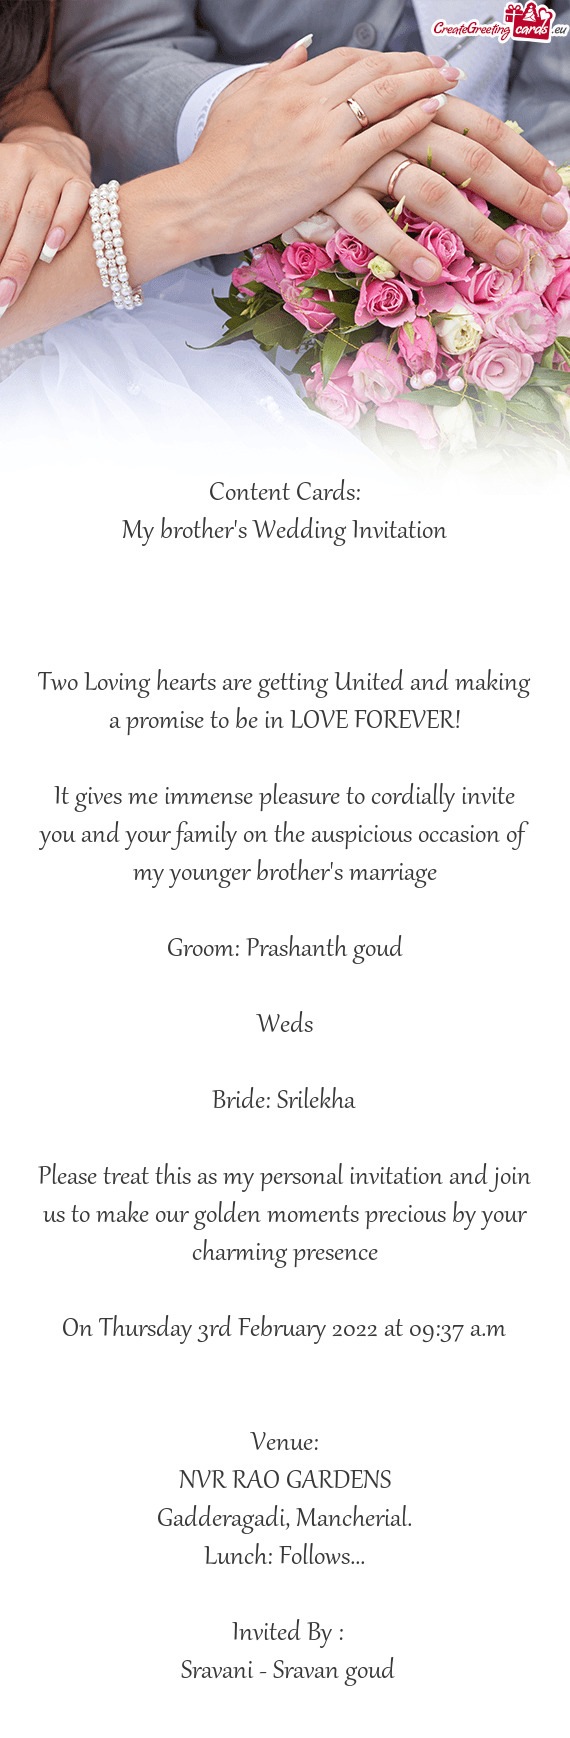 Bride: Srilekha